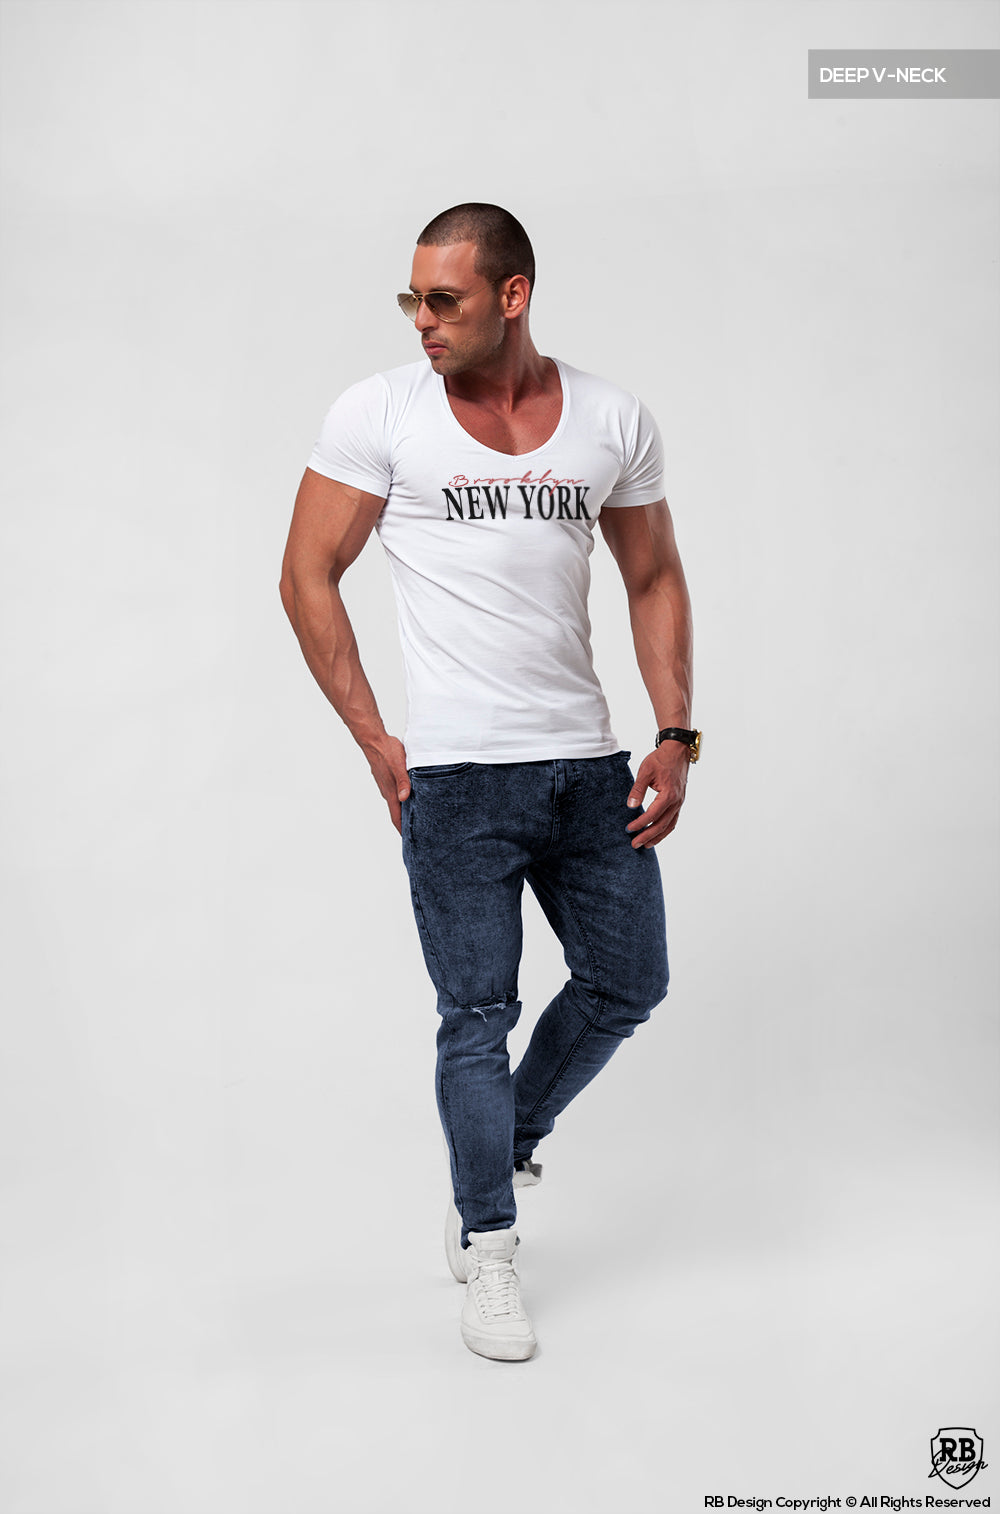 Casual Men's T-shirt Brooklyn New York MD923